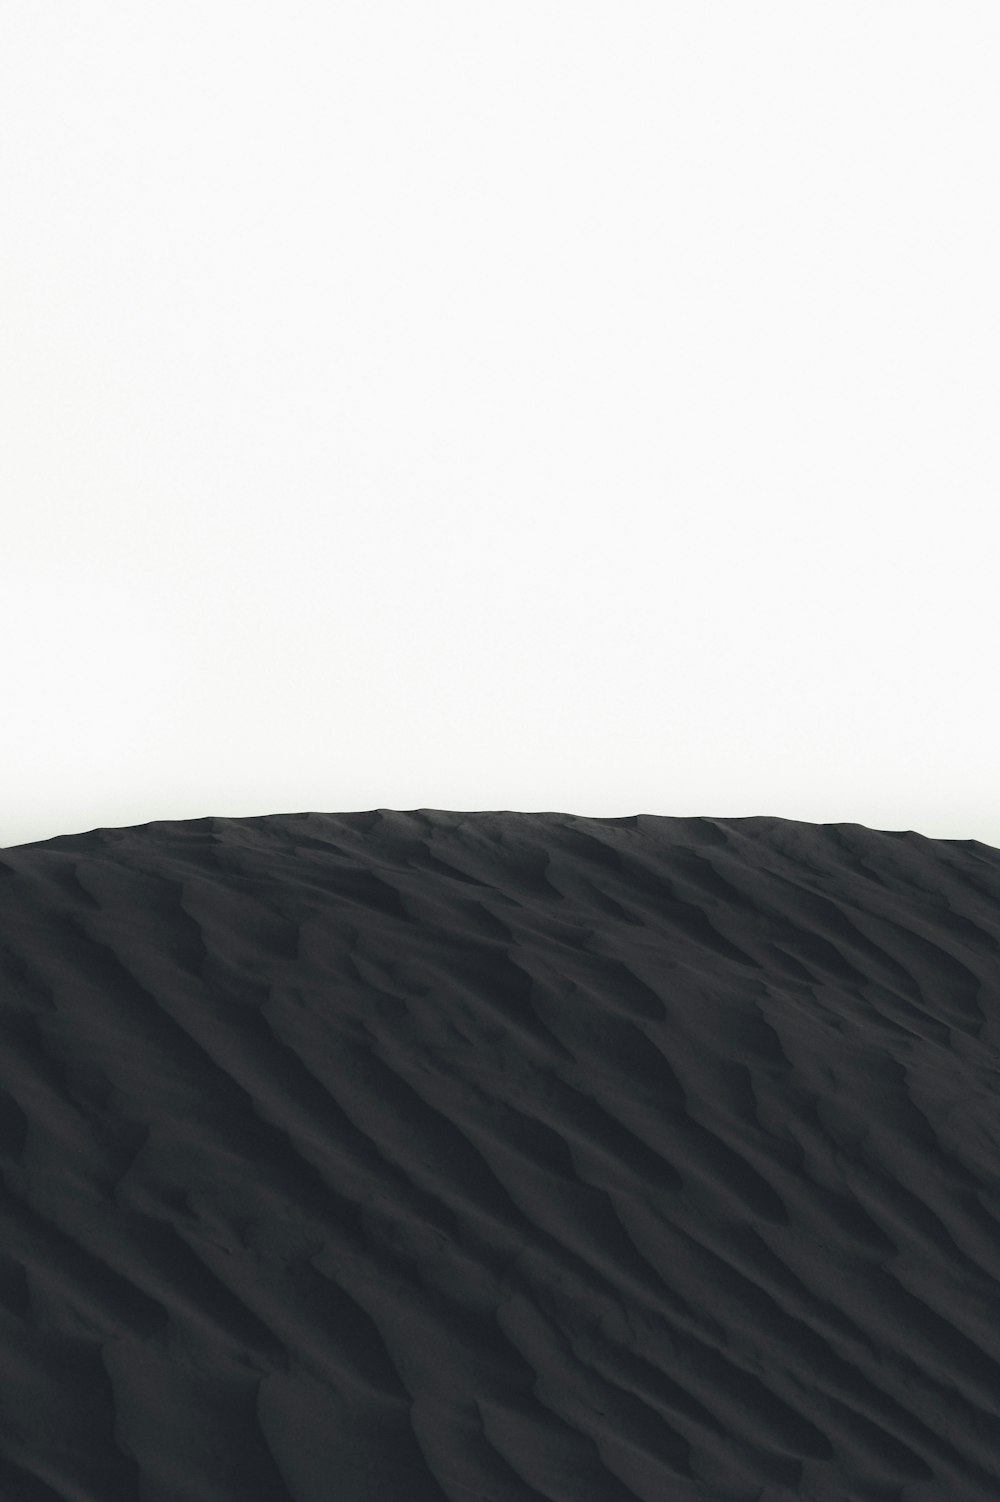 fotografia di paesaggio di dune di sabbia